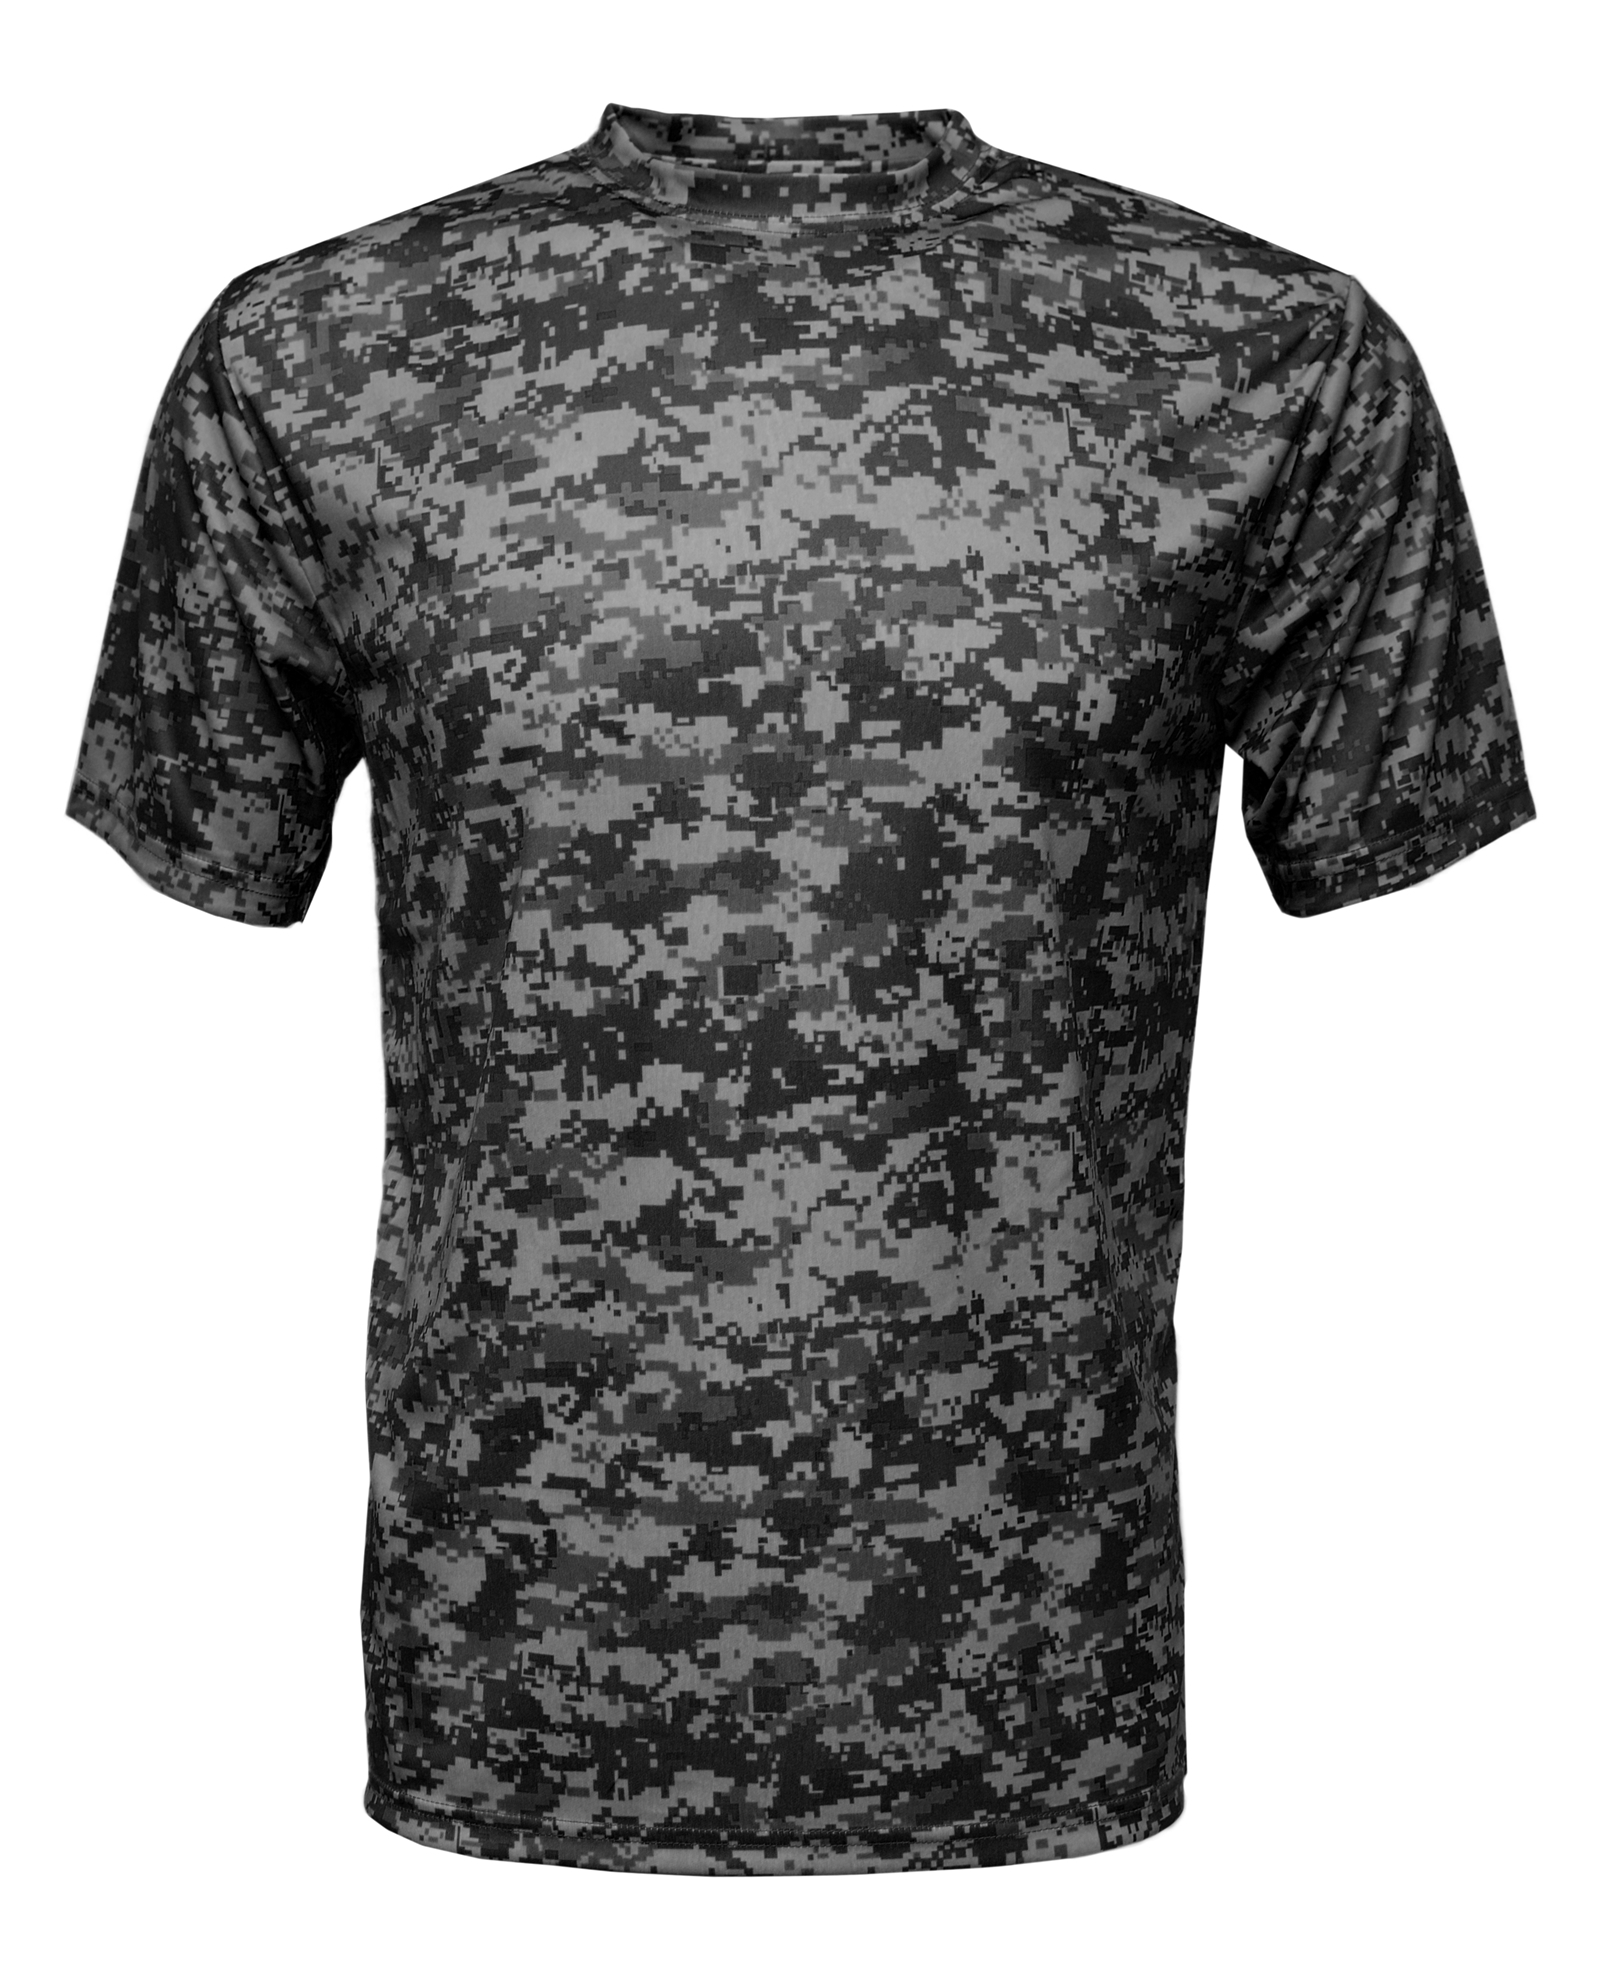 BAW Athletic Wear CM16 - Men's XT Digital Camo T-Shirt